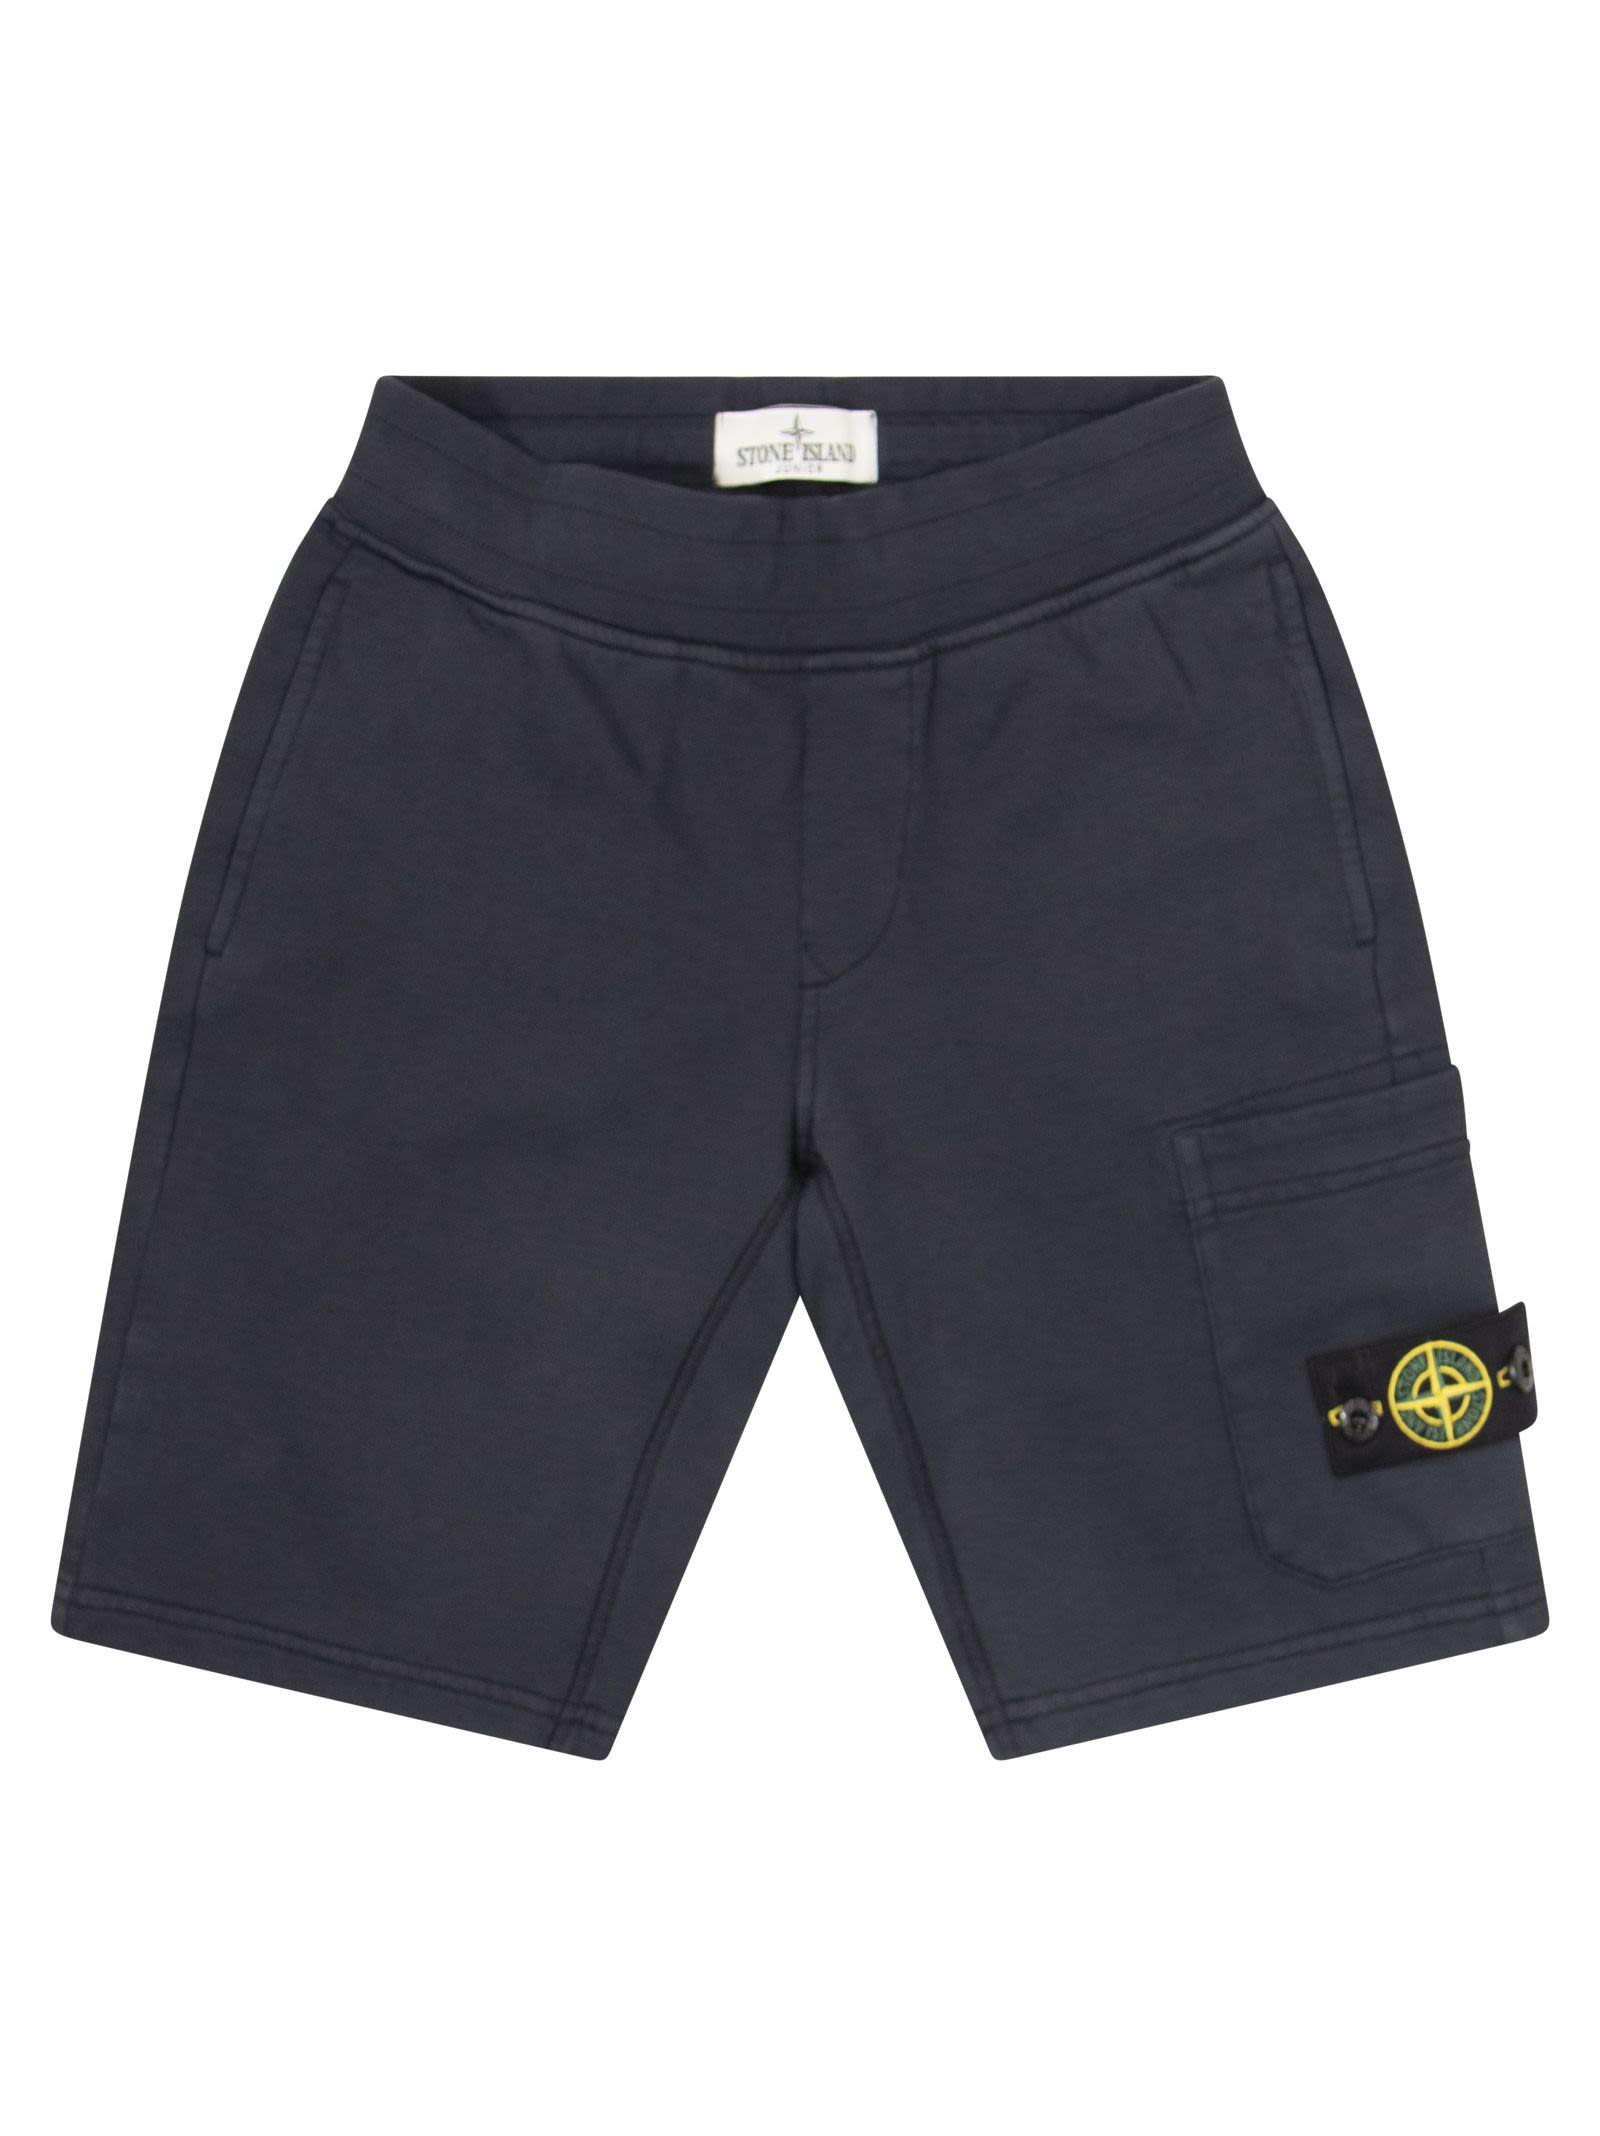 Bermuda shorts with pocket and Stone Island badge - Bellettini.com